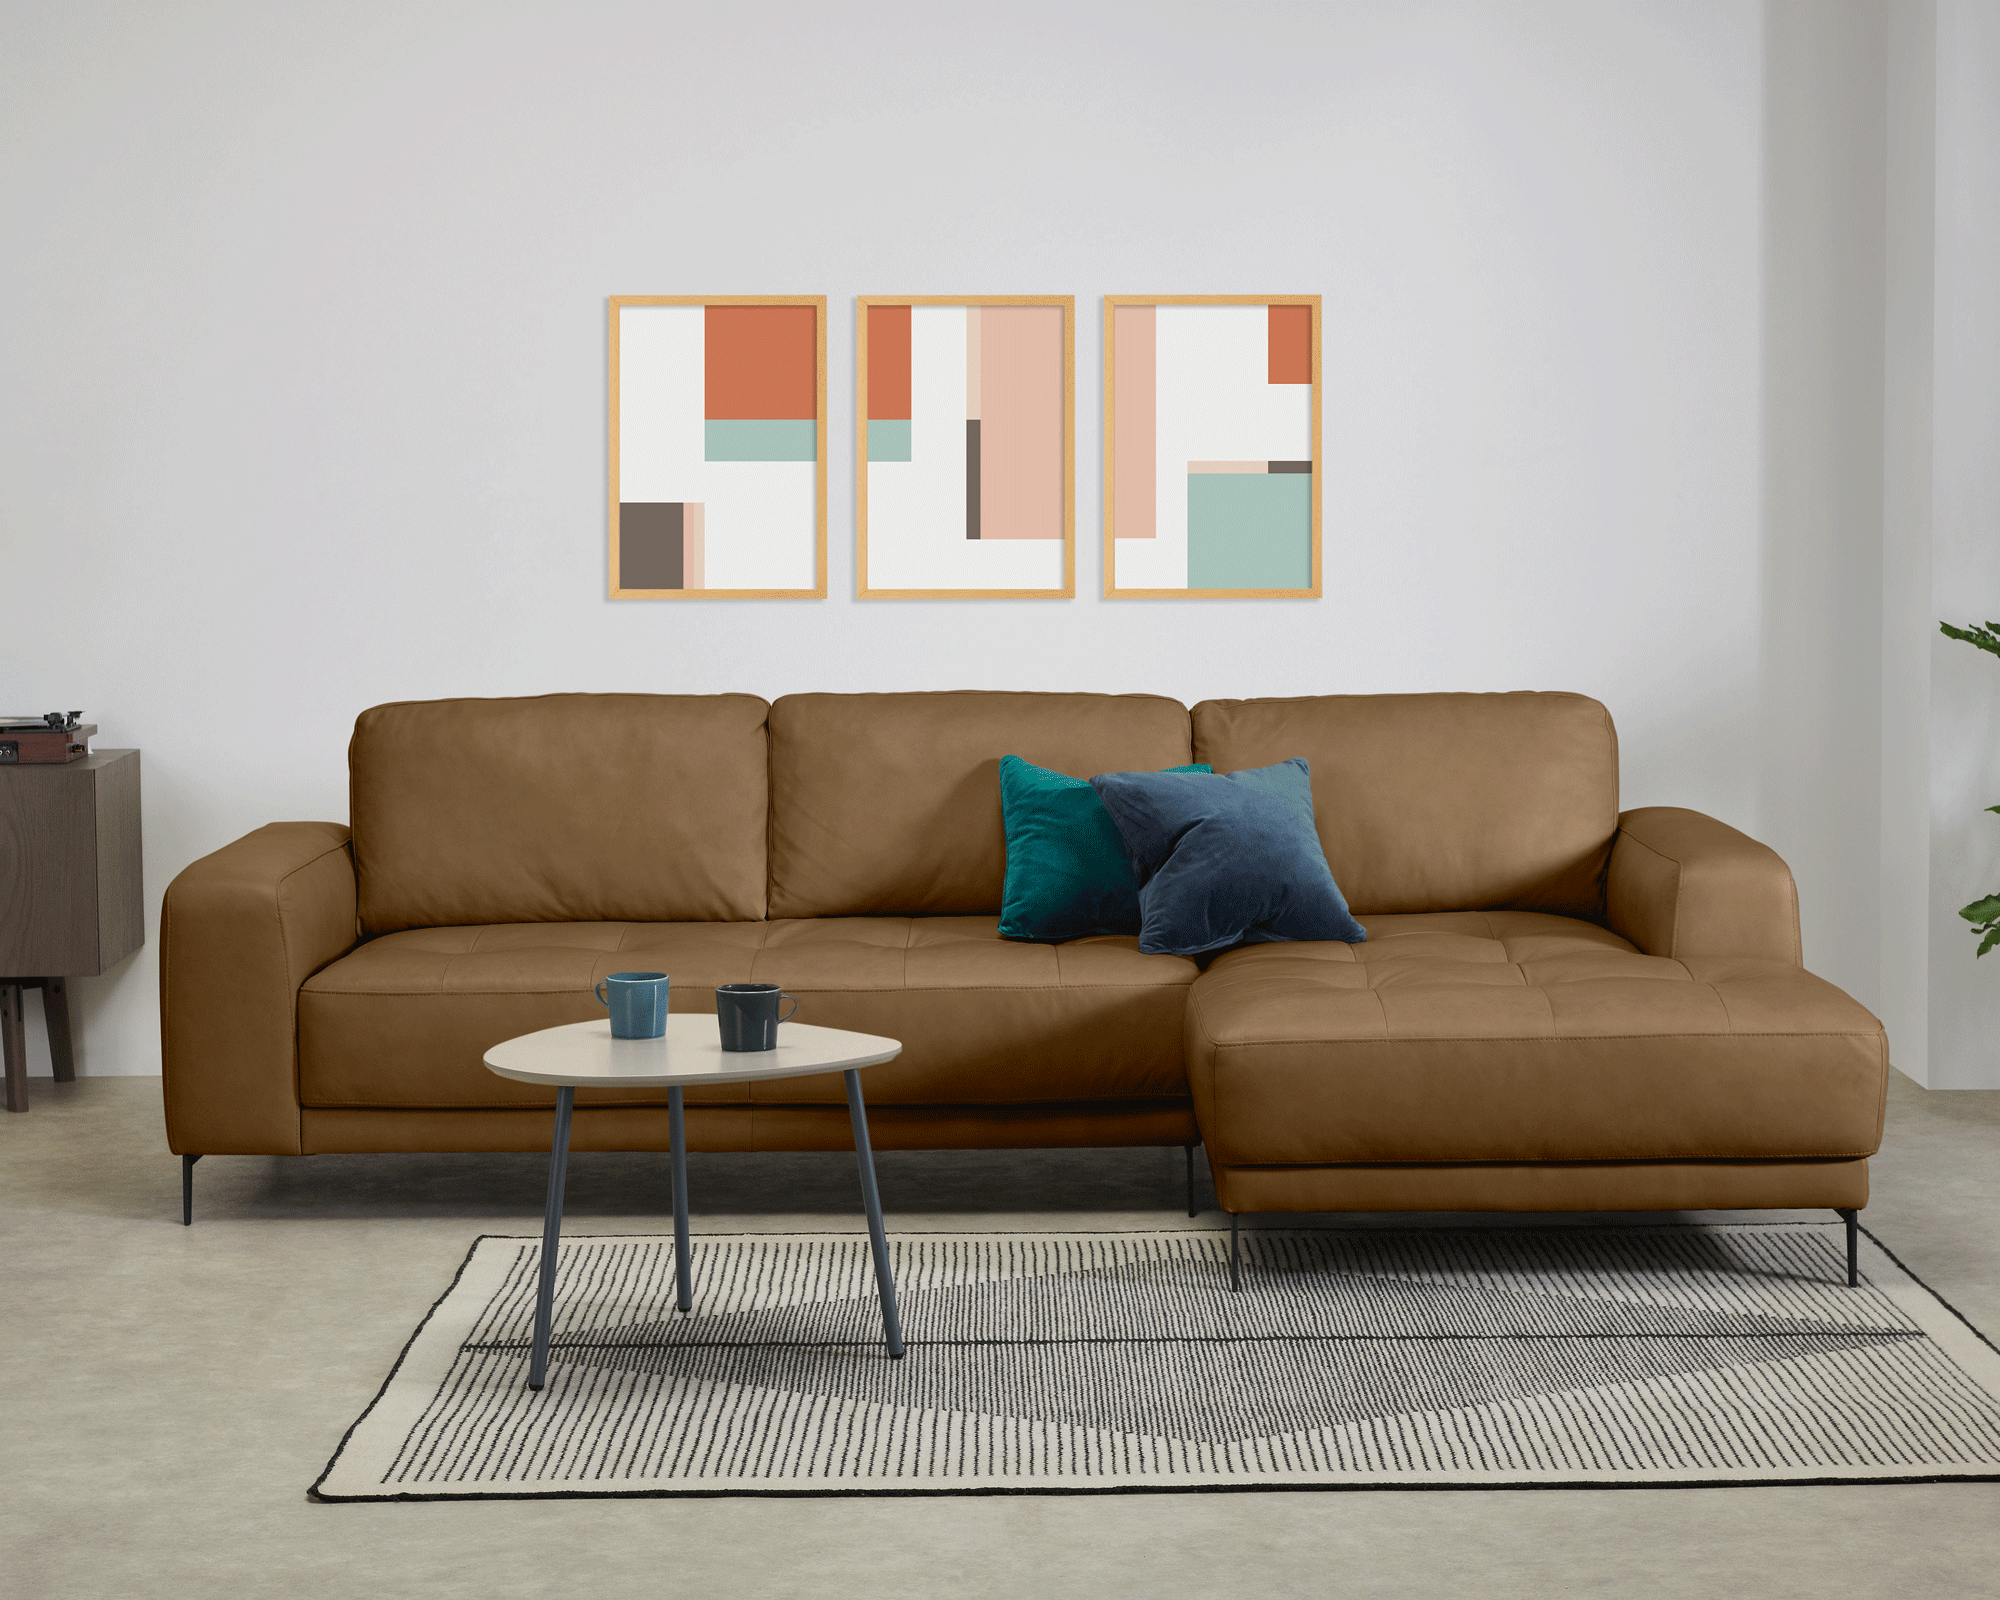 Made.com tan leather sofa, rug and coffee table with prints on wall